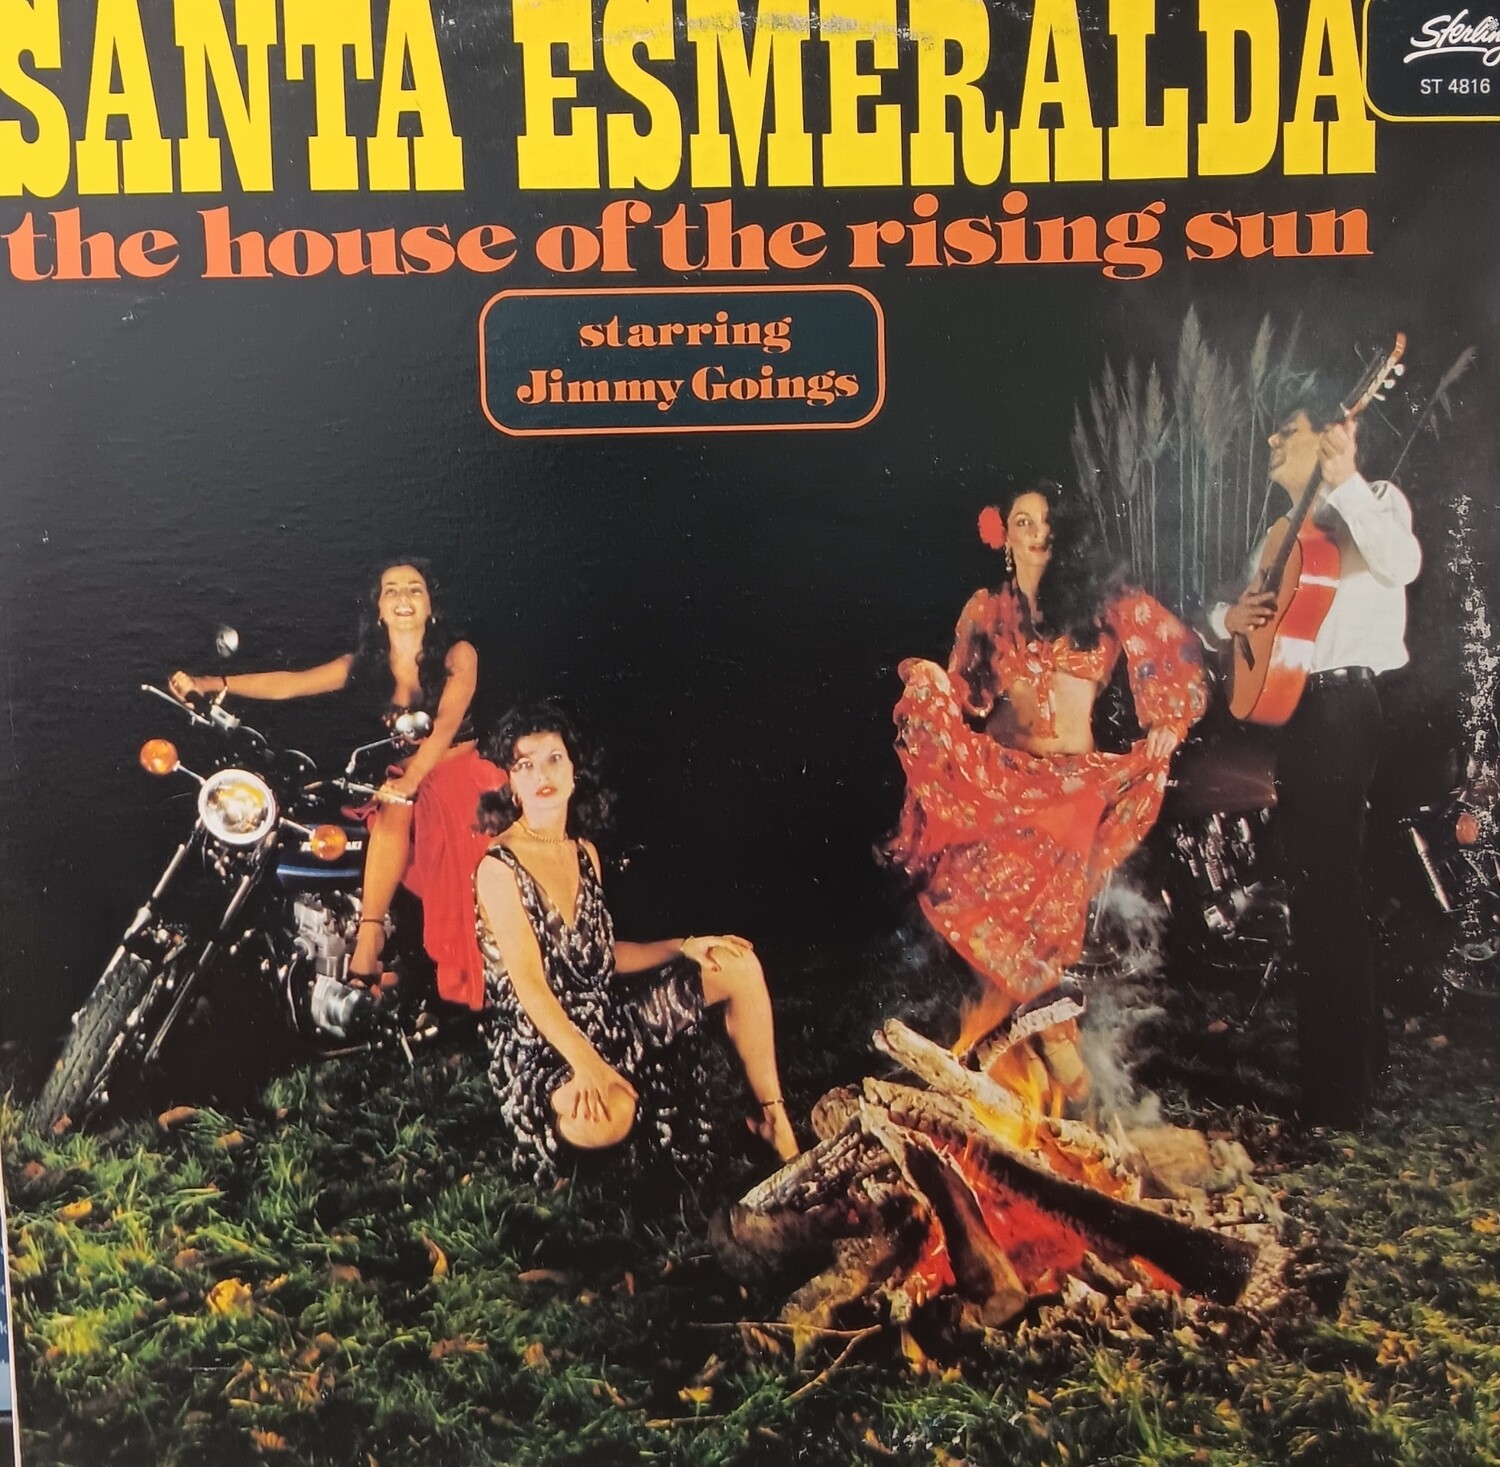 SANTA ESMERALDA - The house of the rising sun